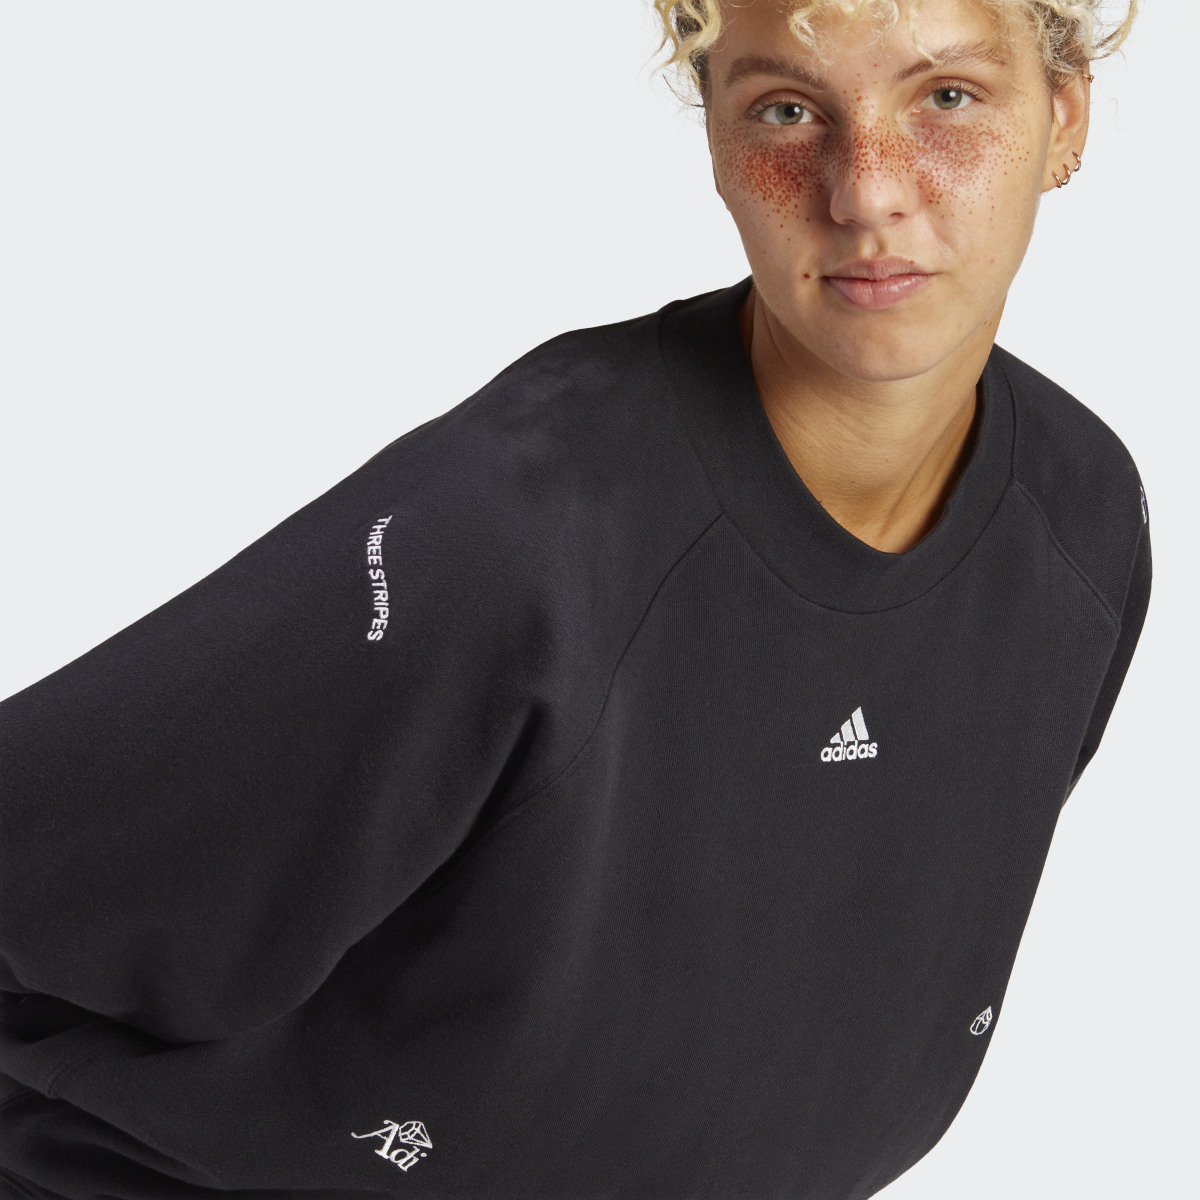 Adidas Sweatshirt Oversize Healing Crystals. 6